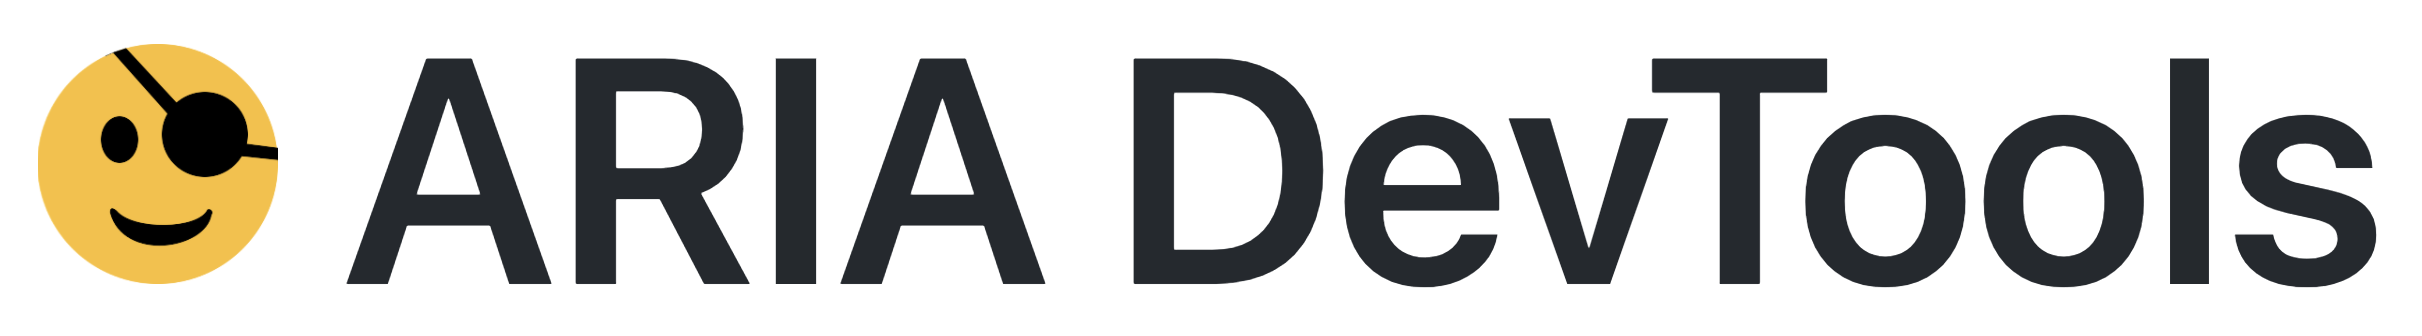 ARIA DevTools logo